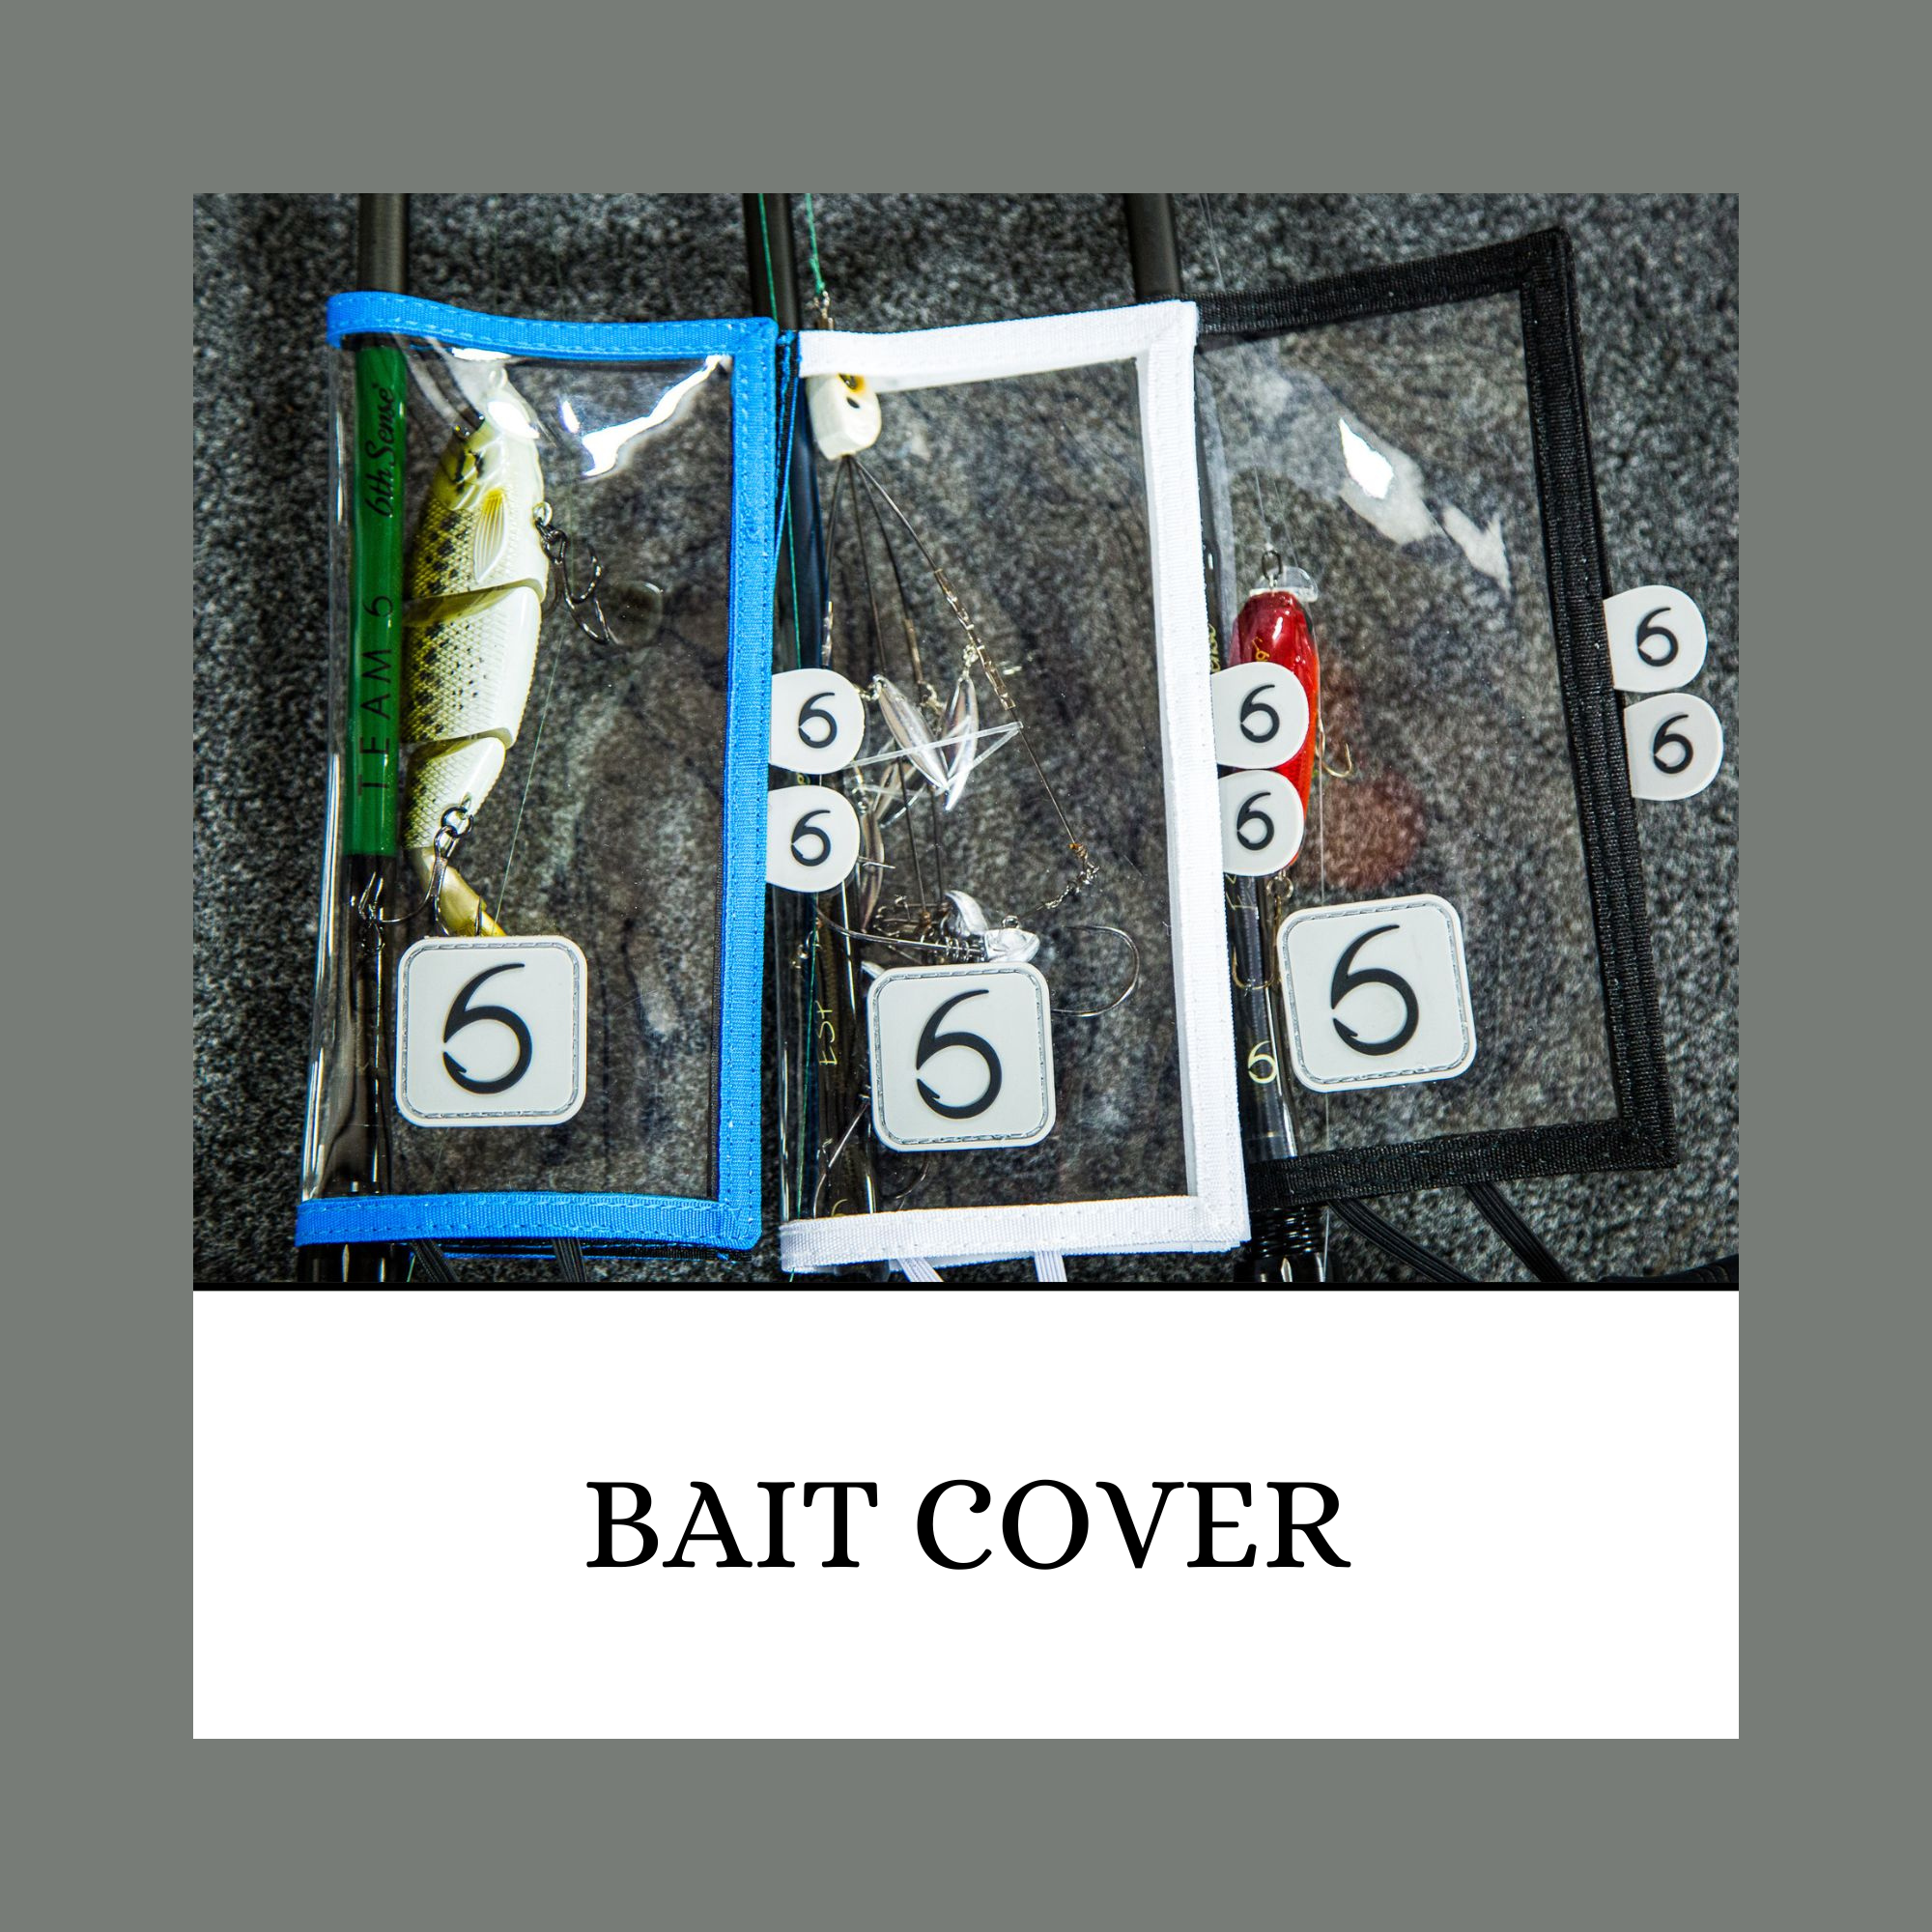 Bait Cover, 6th Sense Fishing, Fishing Accessories